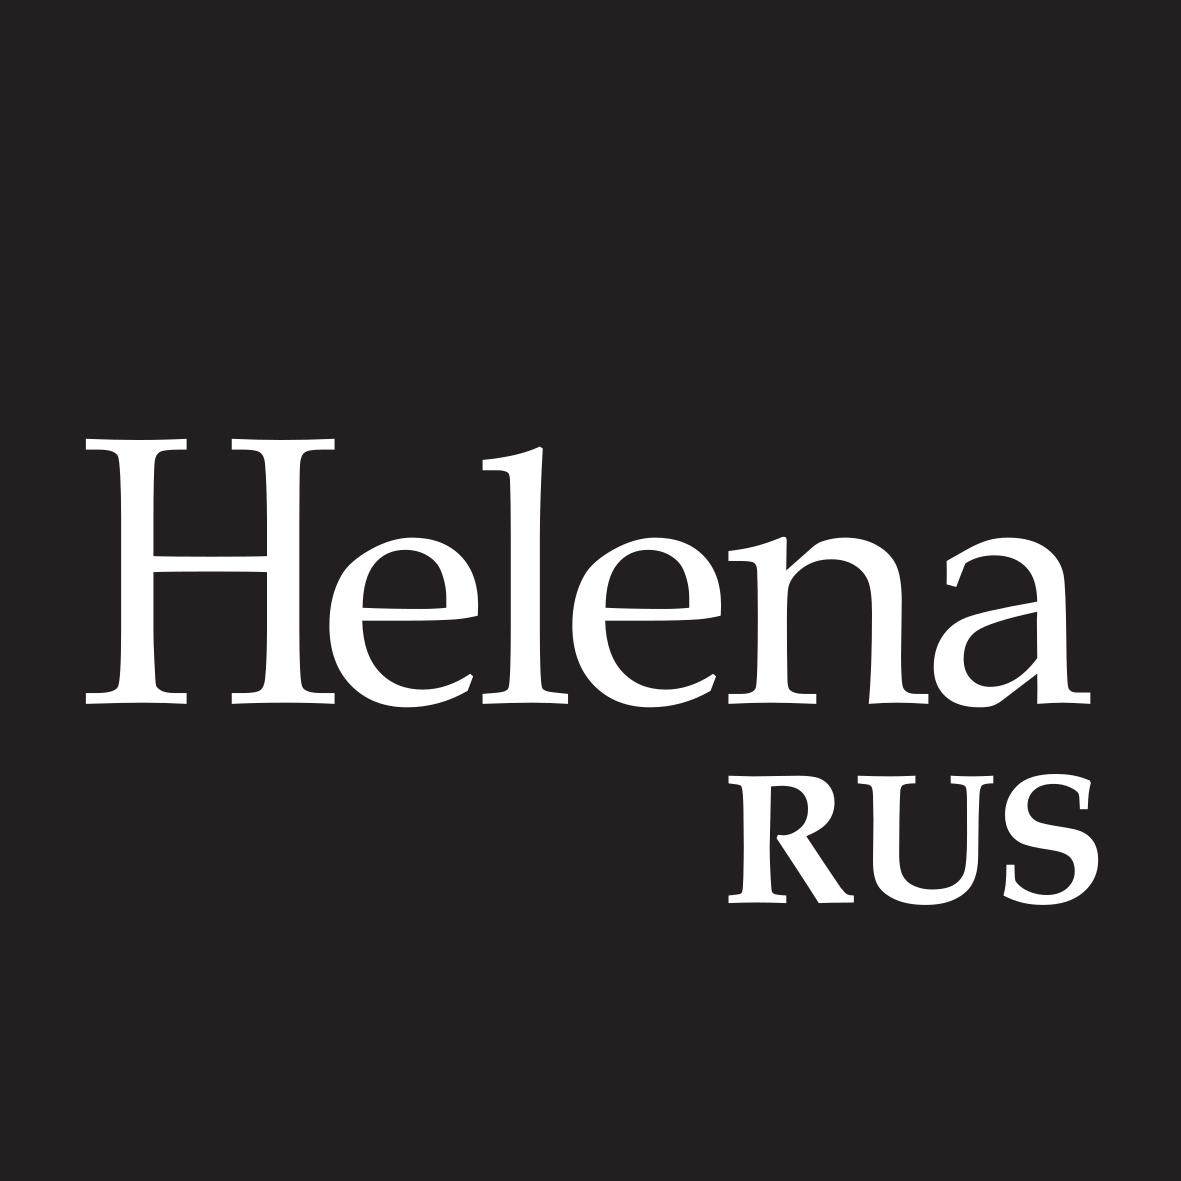 Helena-RUS-.png